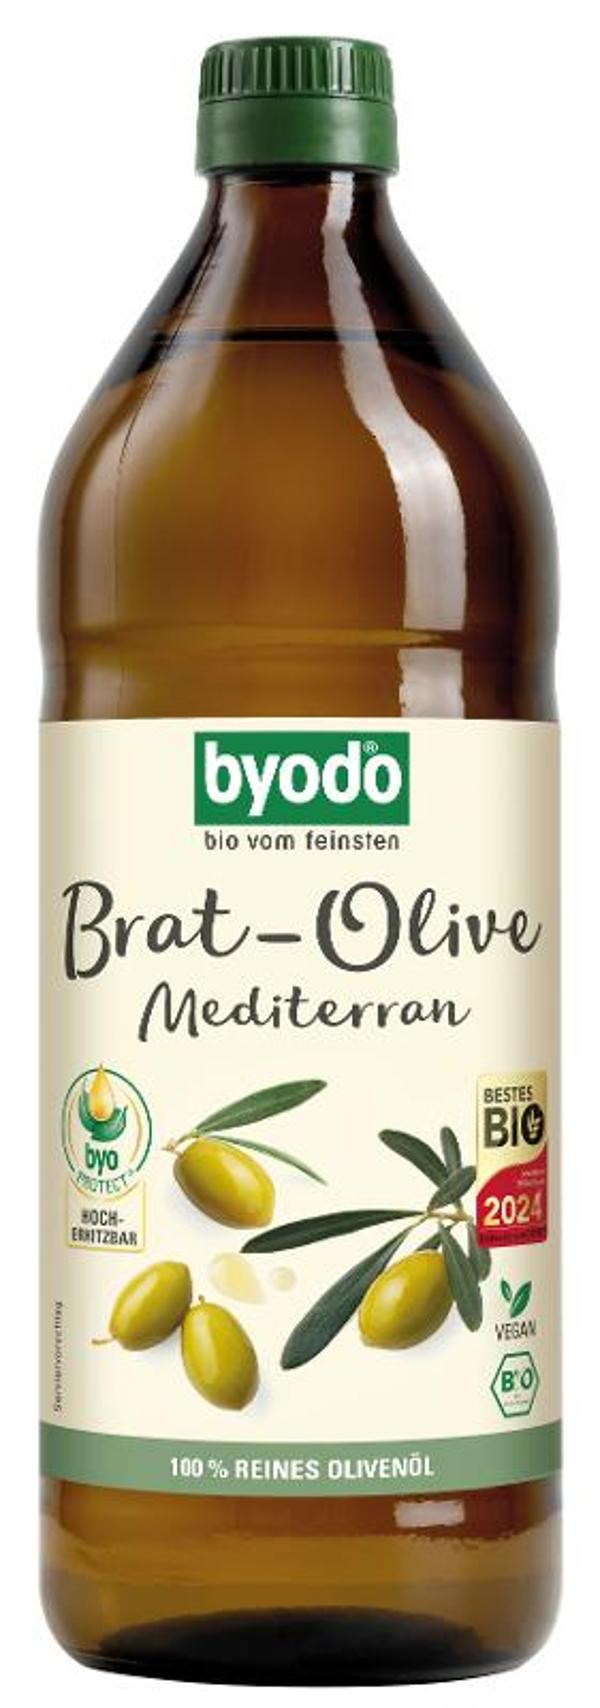 Produktfoto zu Bratöl, Brat-Olive mediterran